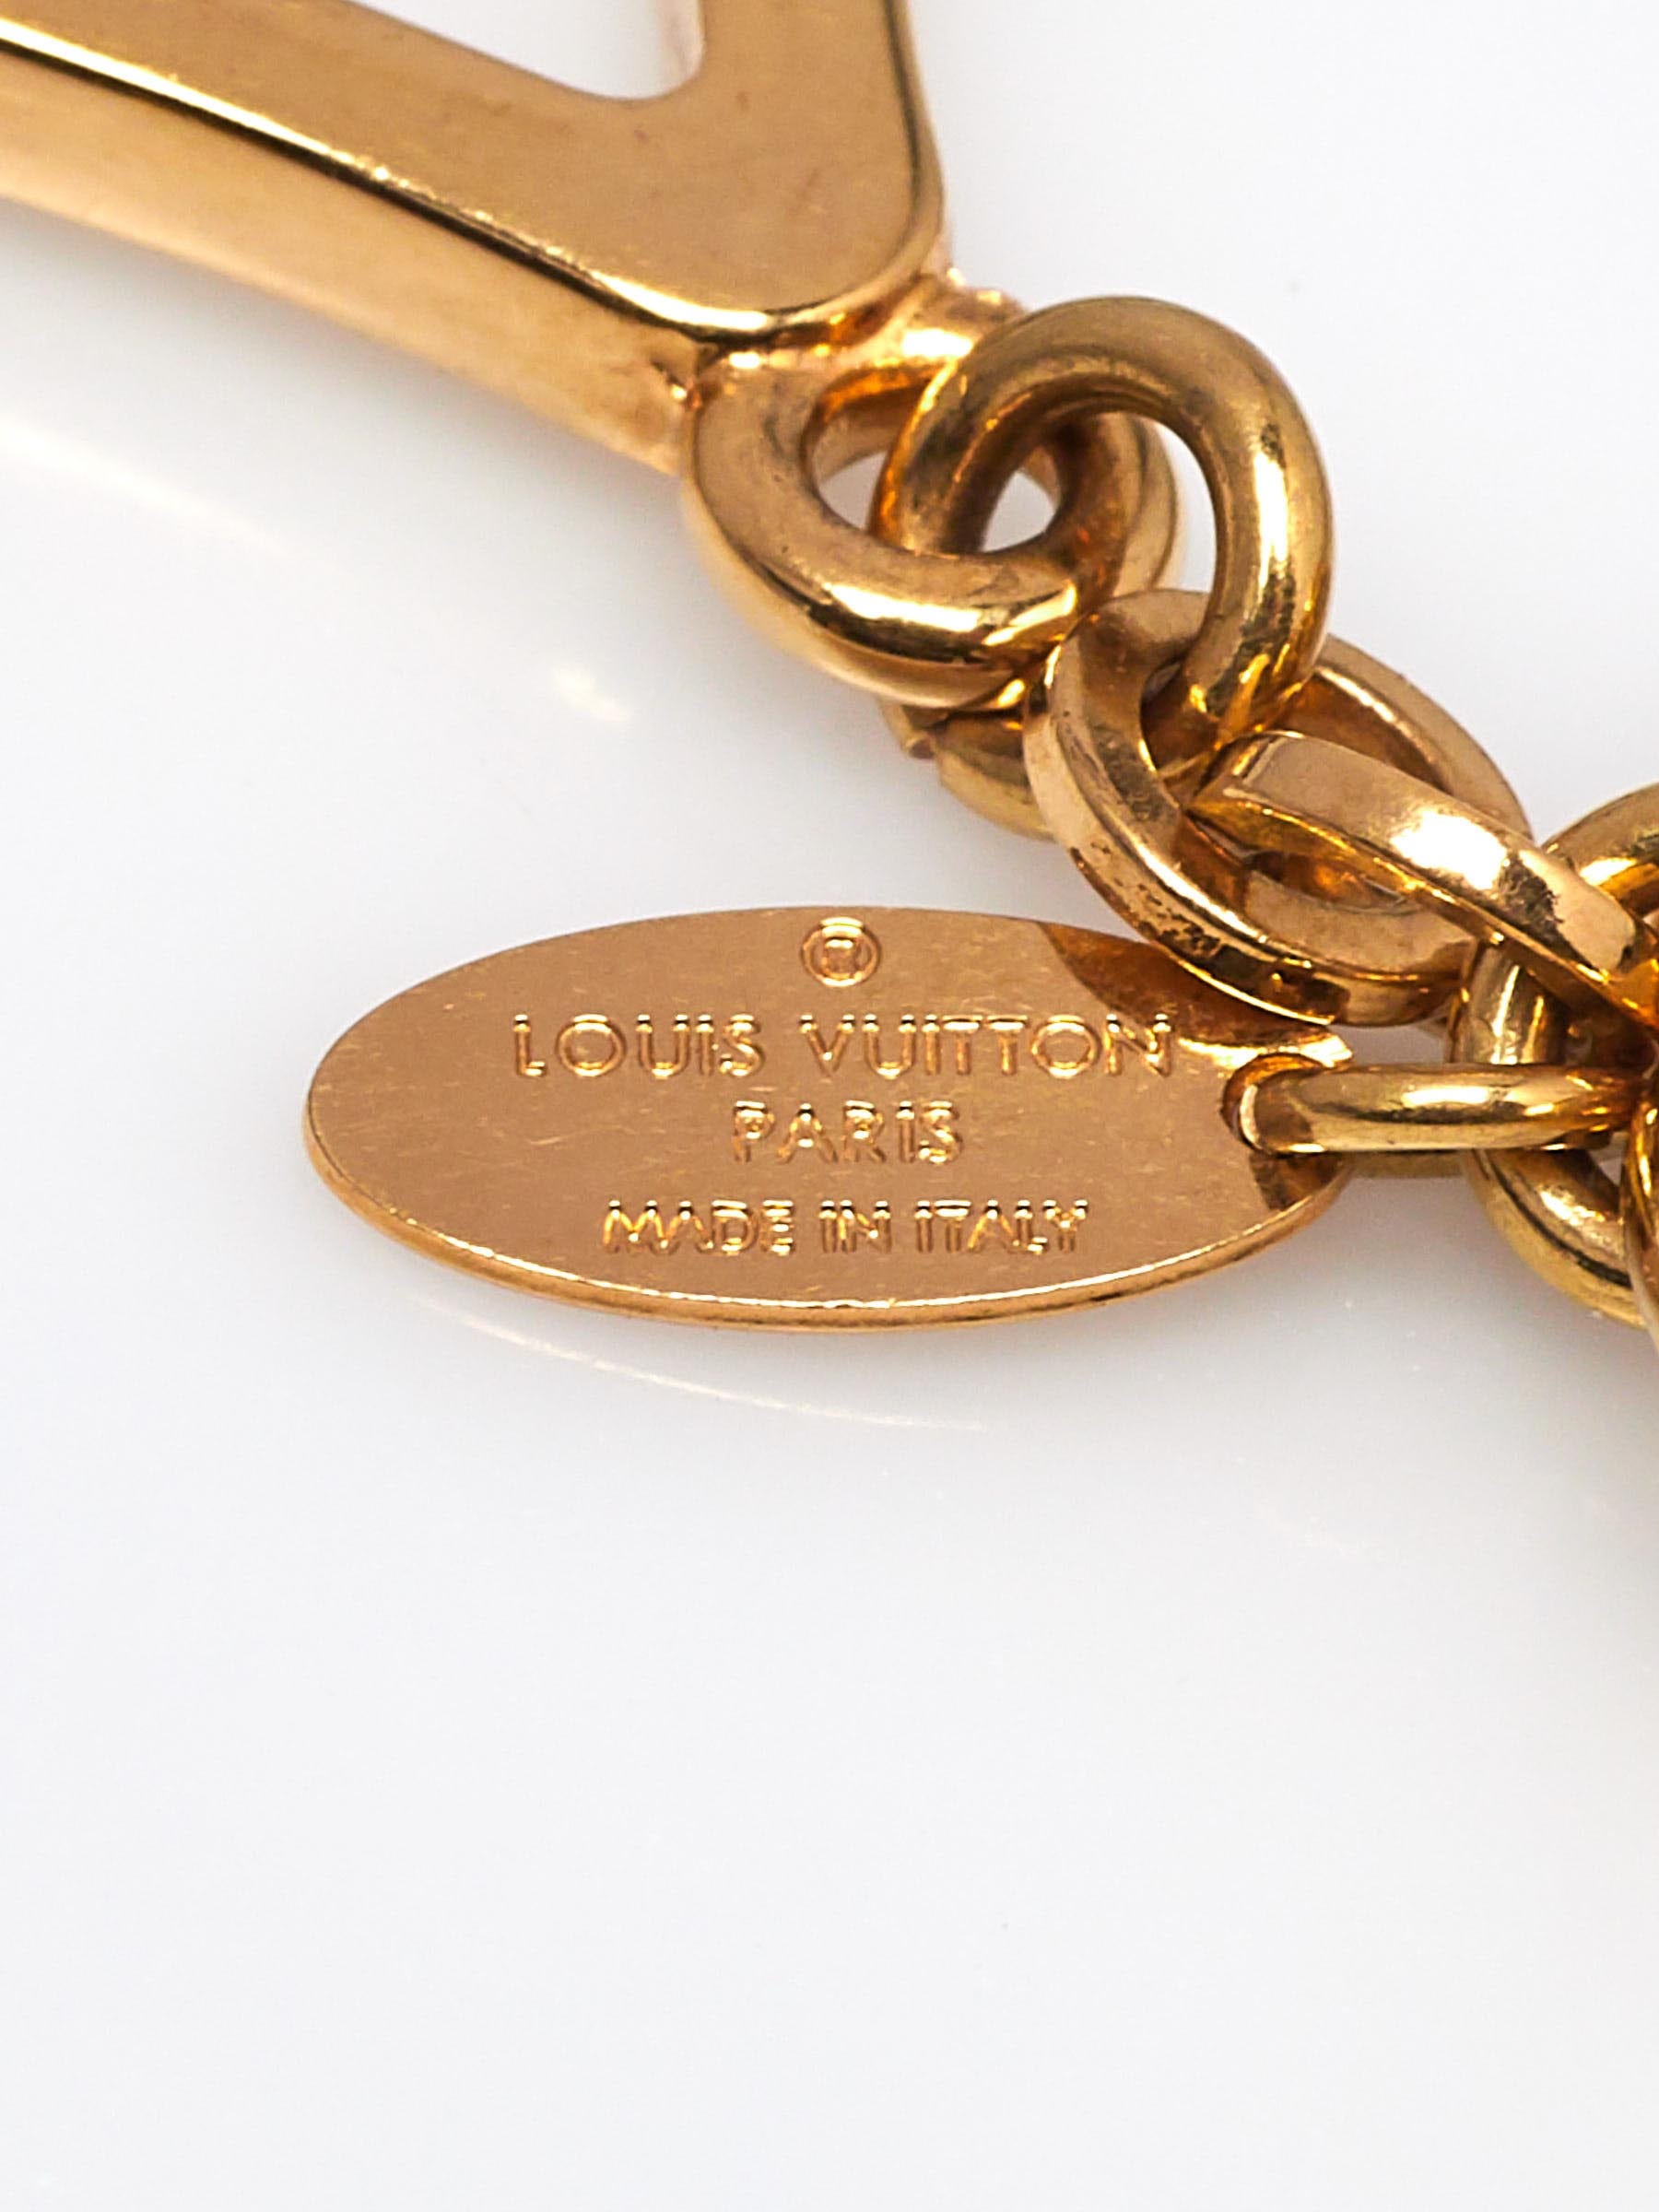 LOUIS VUITTON Porte Cles Puzzle Bag Charm Key Ring Brown Gold Brass CX0171